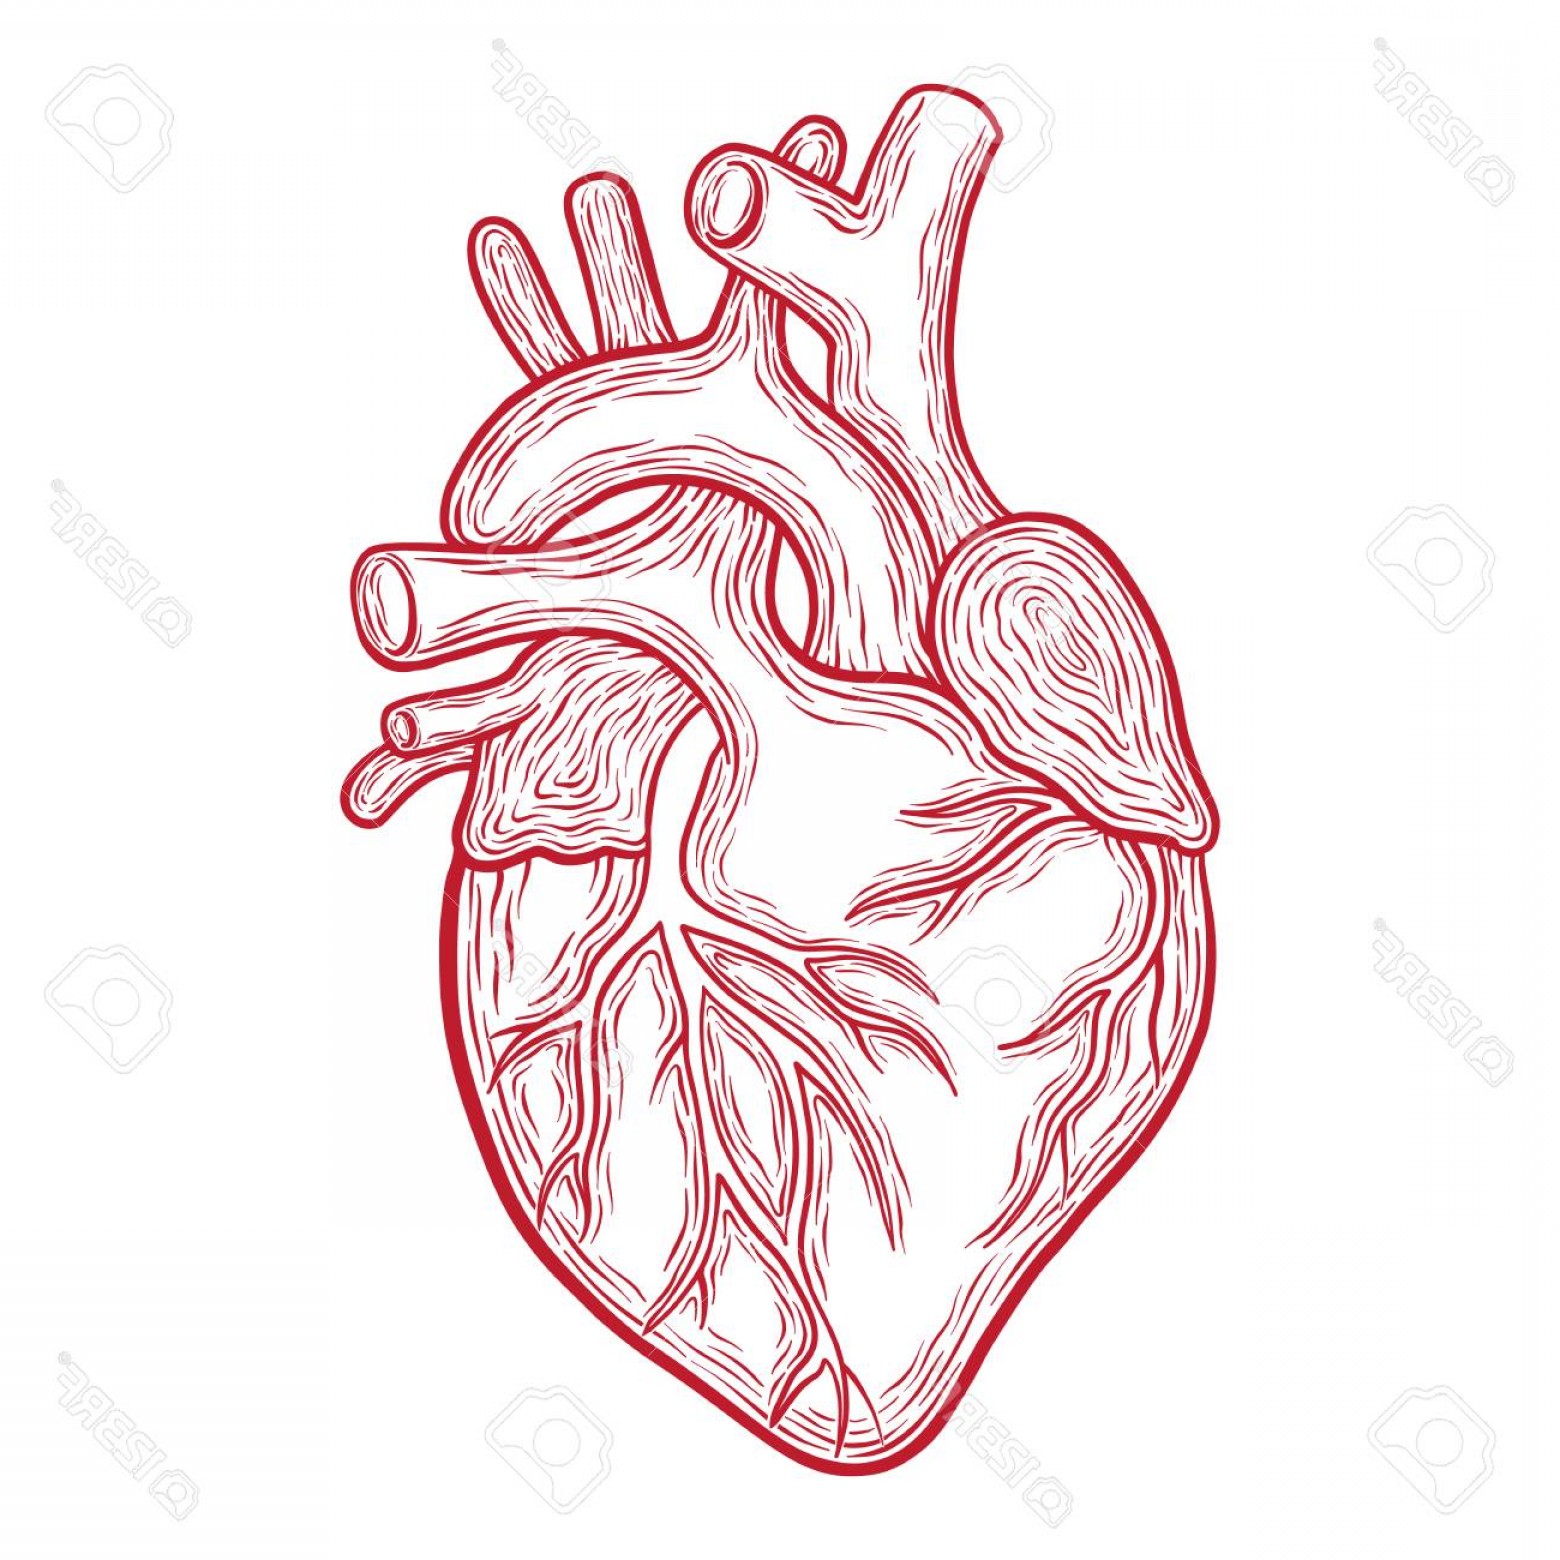 Сердце человека для печати